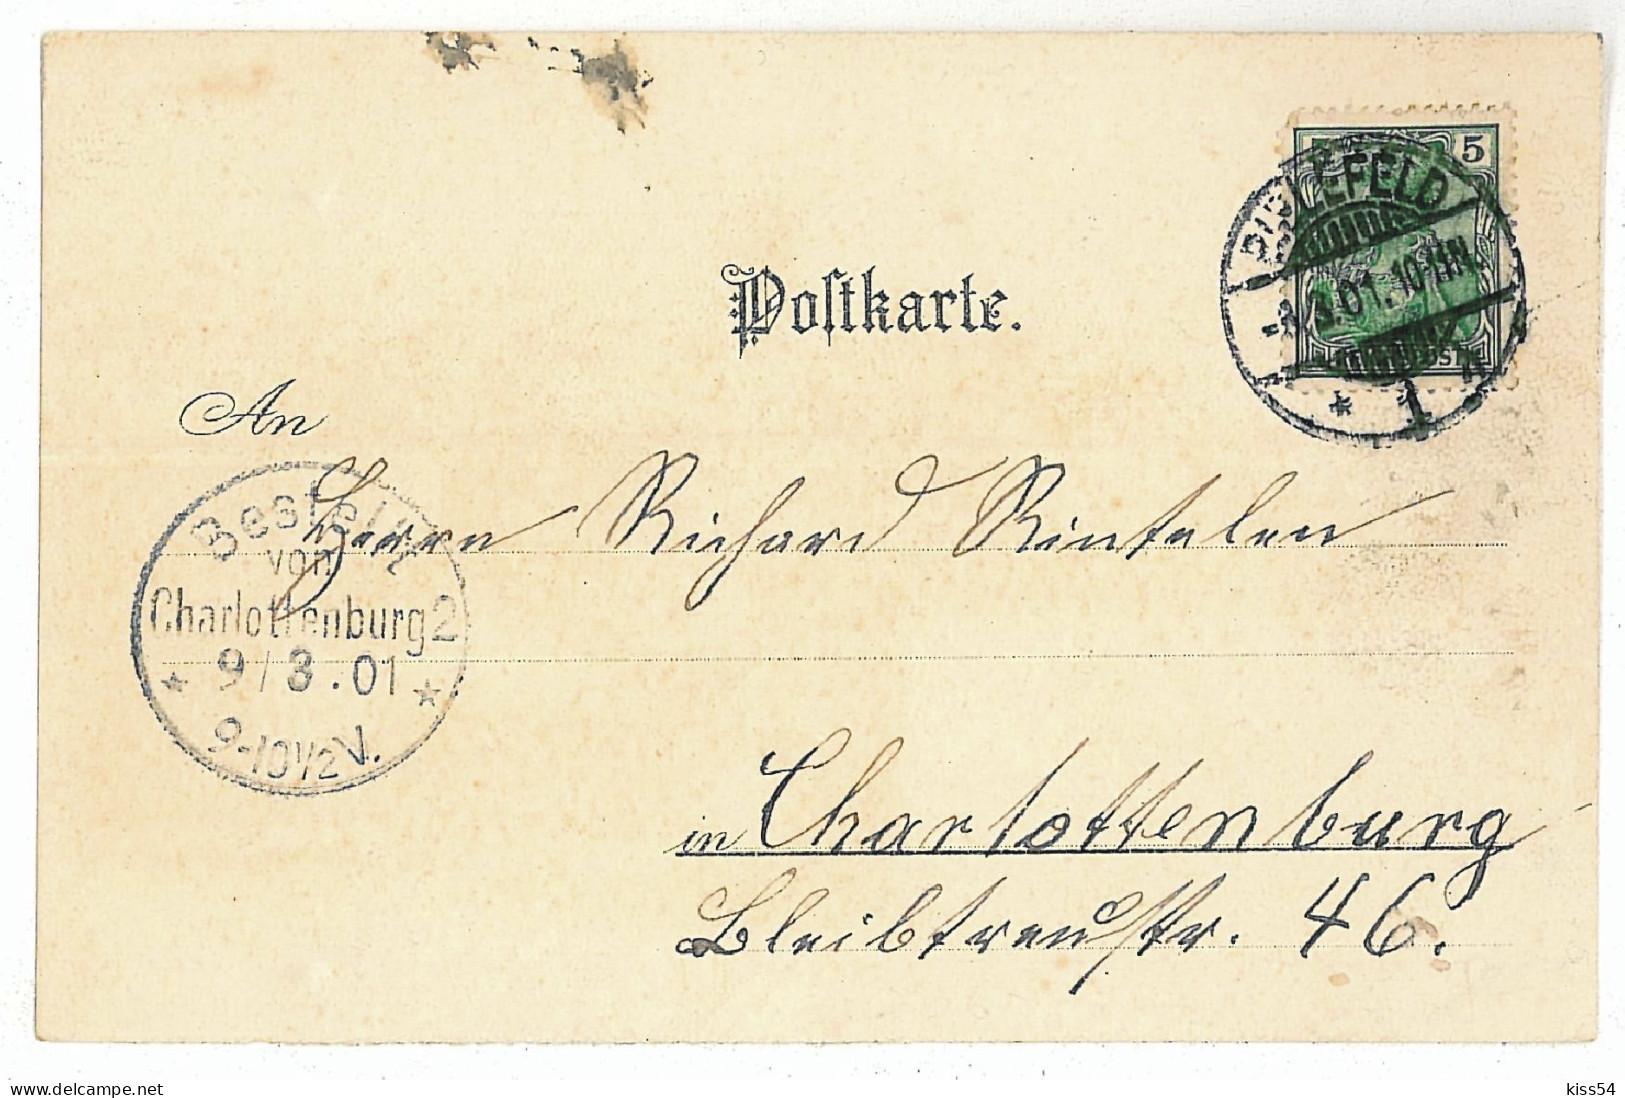 GER 48 - 5708 BIELEFELD, Litho, Germany - Old Postcard - Used - 1901 - Bielefeld